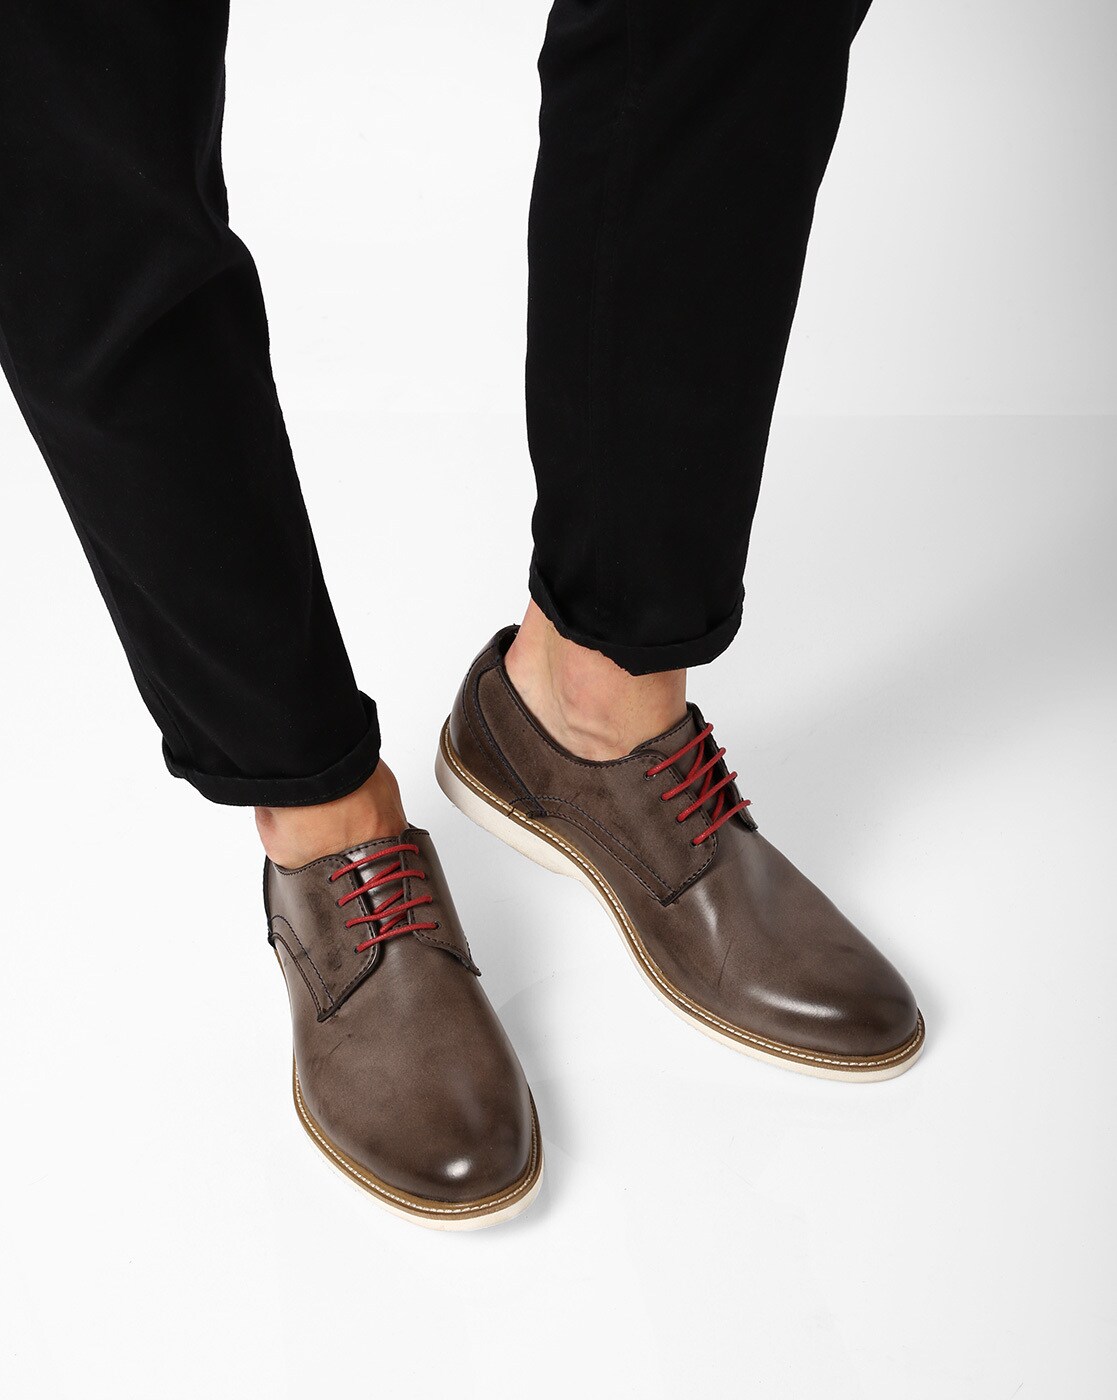 duke brown casual shoes